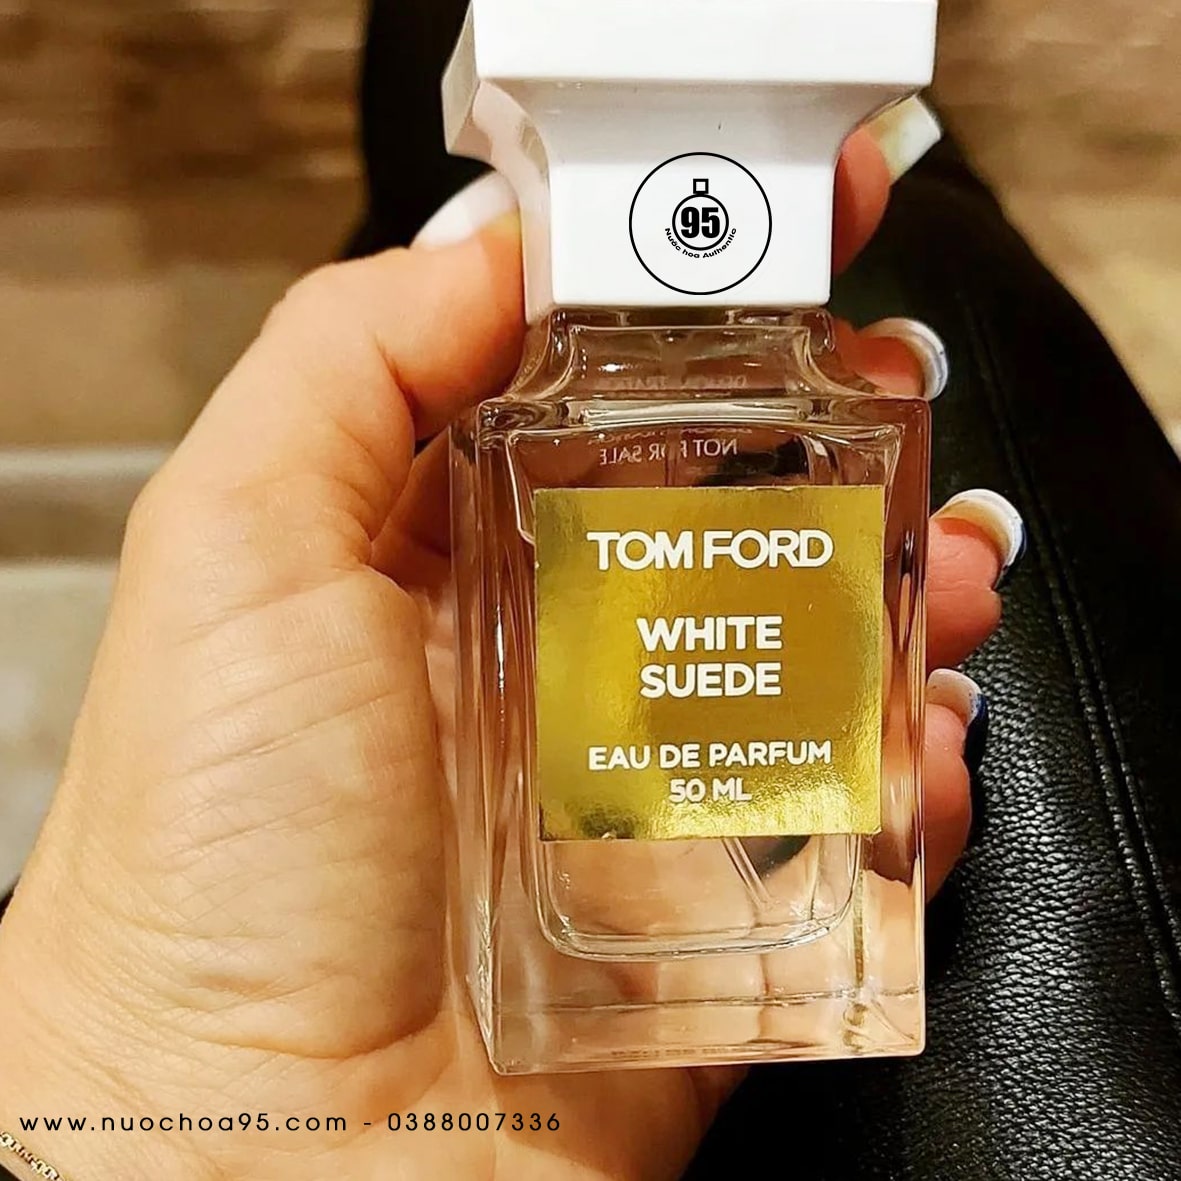 Nước hoa Tom Ford White Suede - Ảnh 3